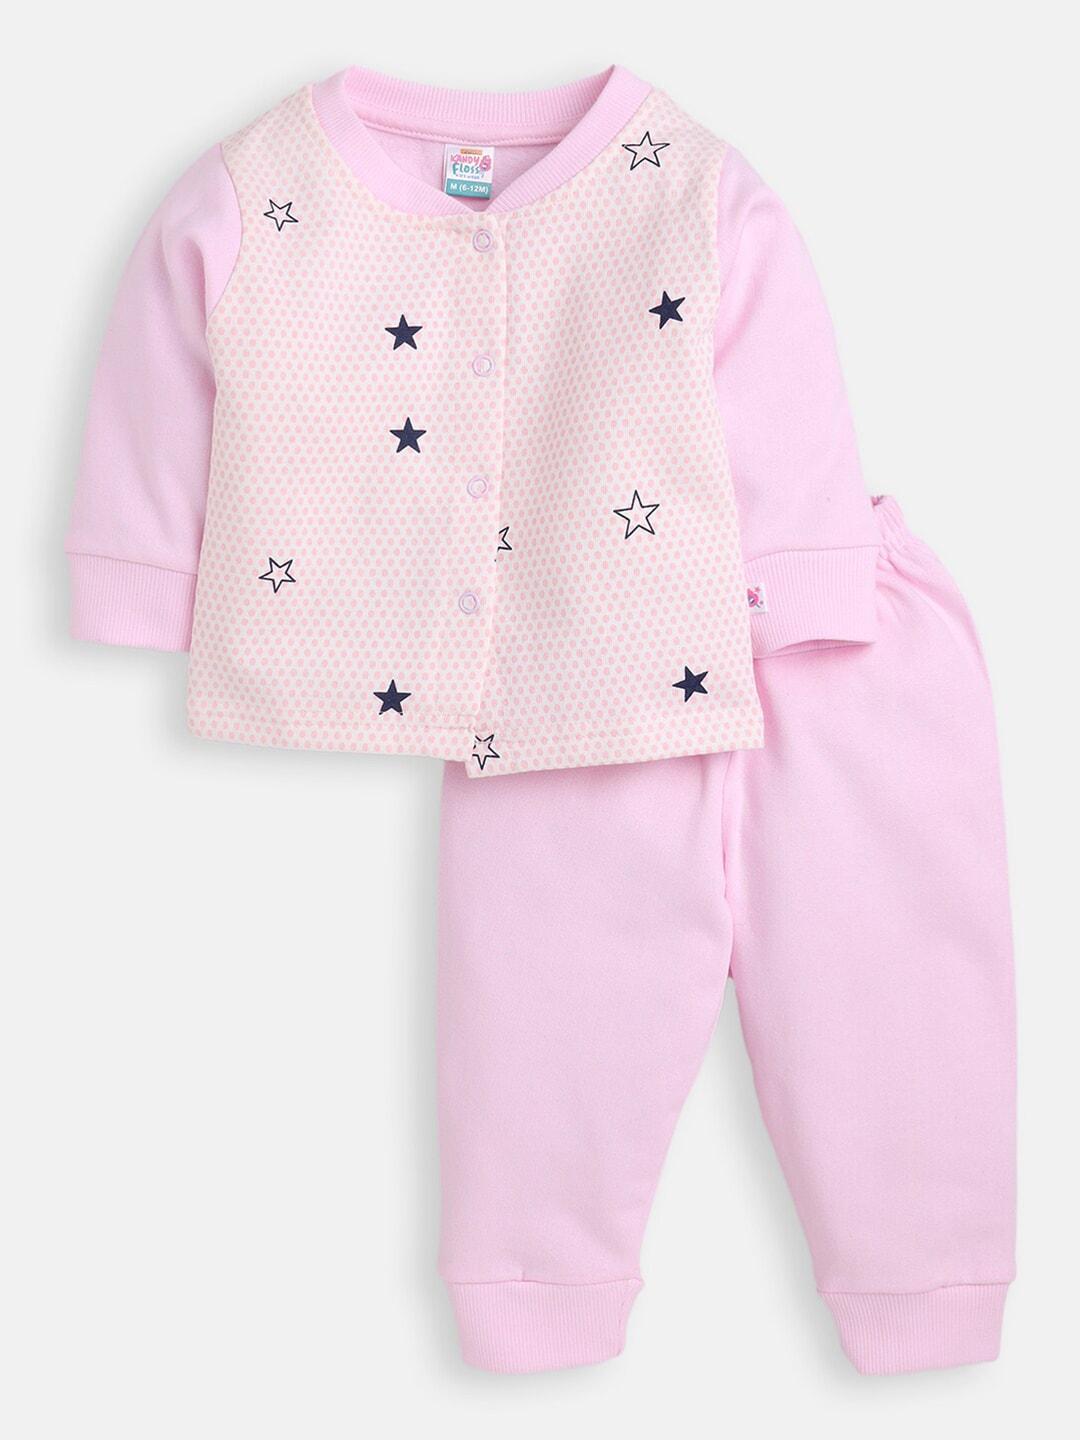 amul kandyfloss unisex kids pink & black printed t-shirt with pyjamas